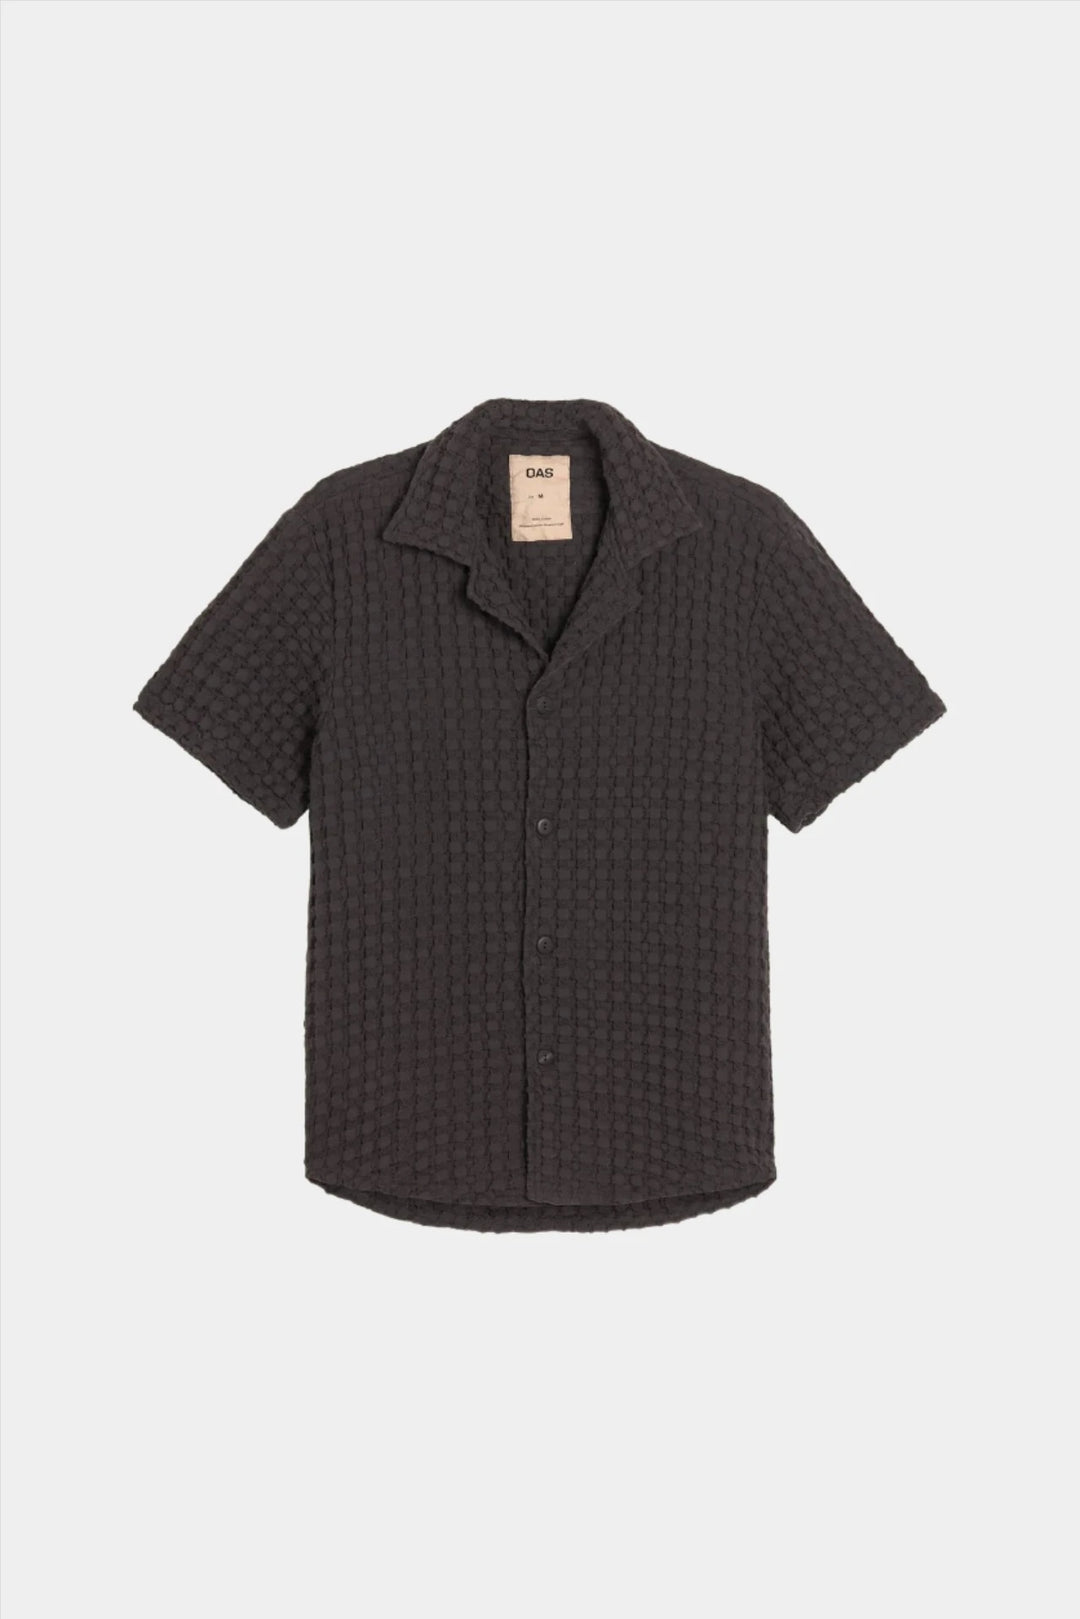 OAS Cuba Waffle Shirt - Nearly Black